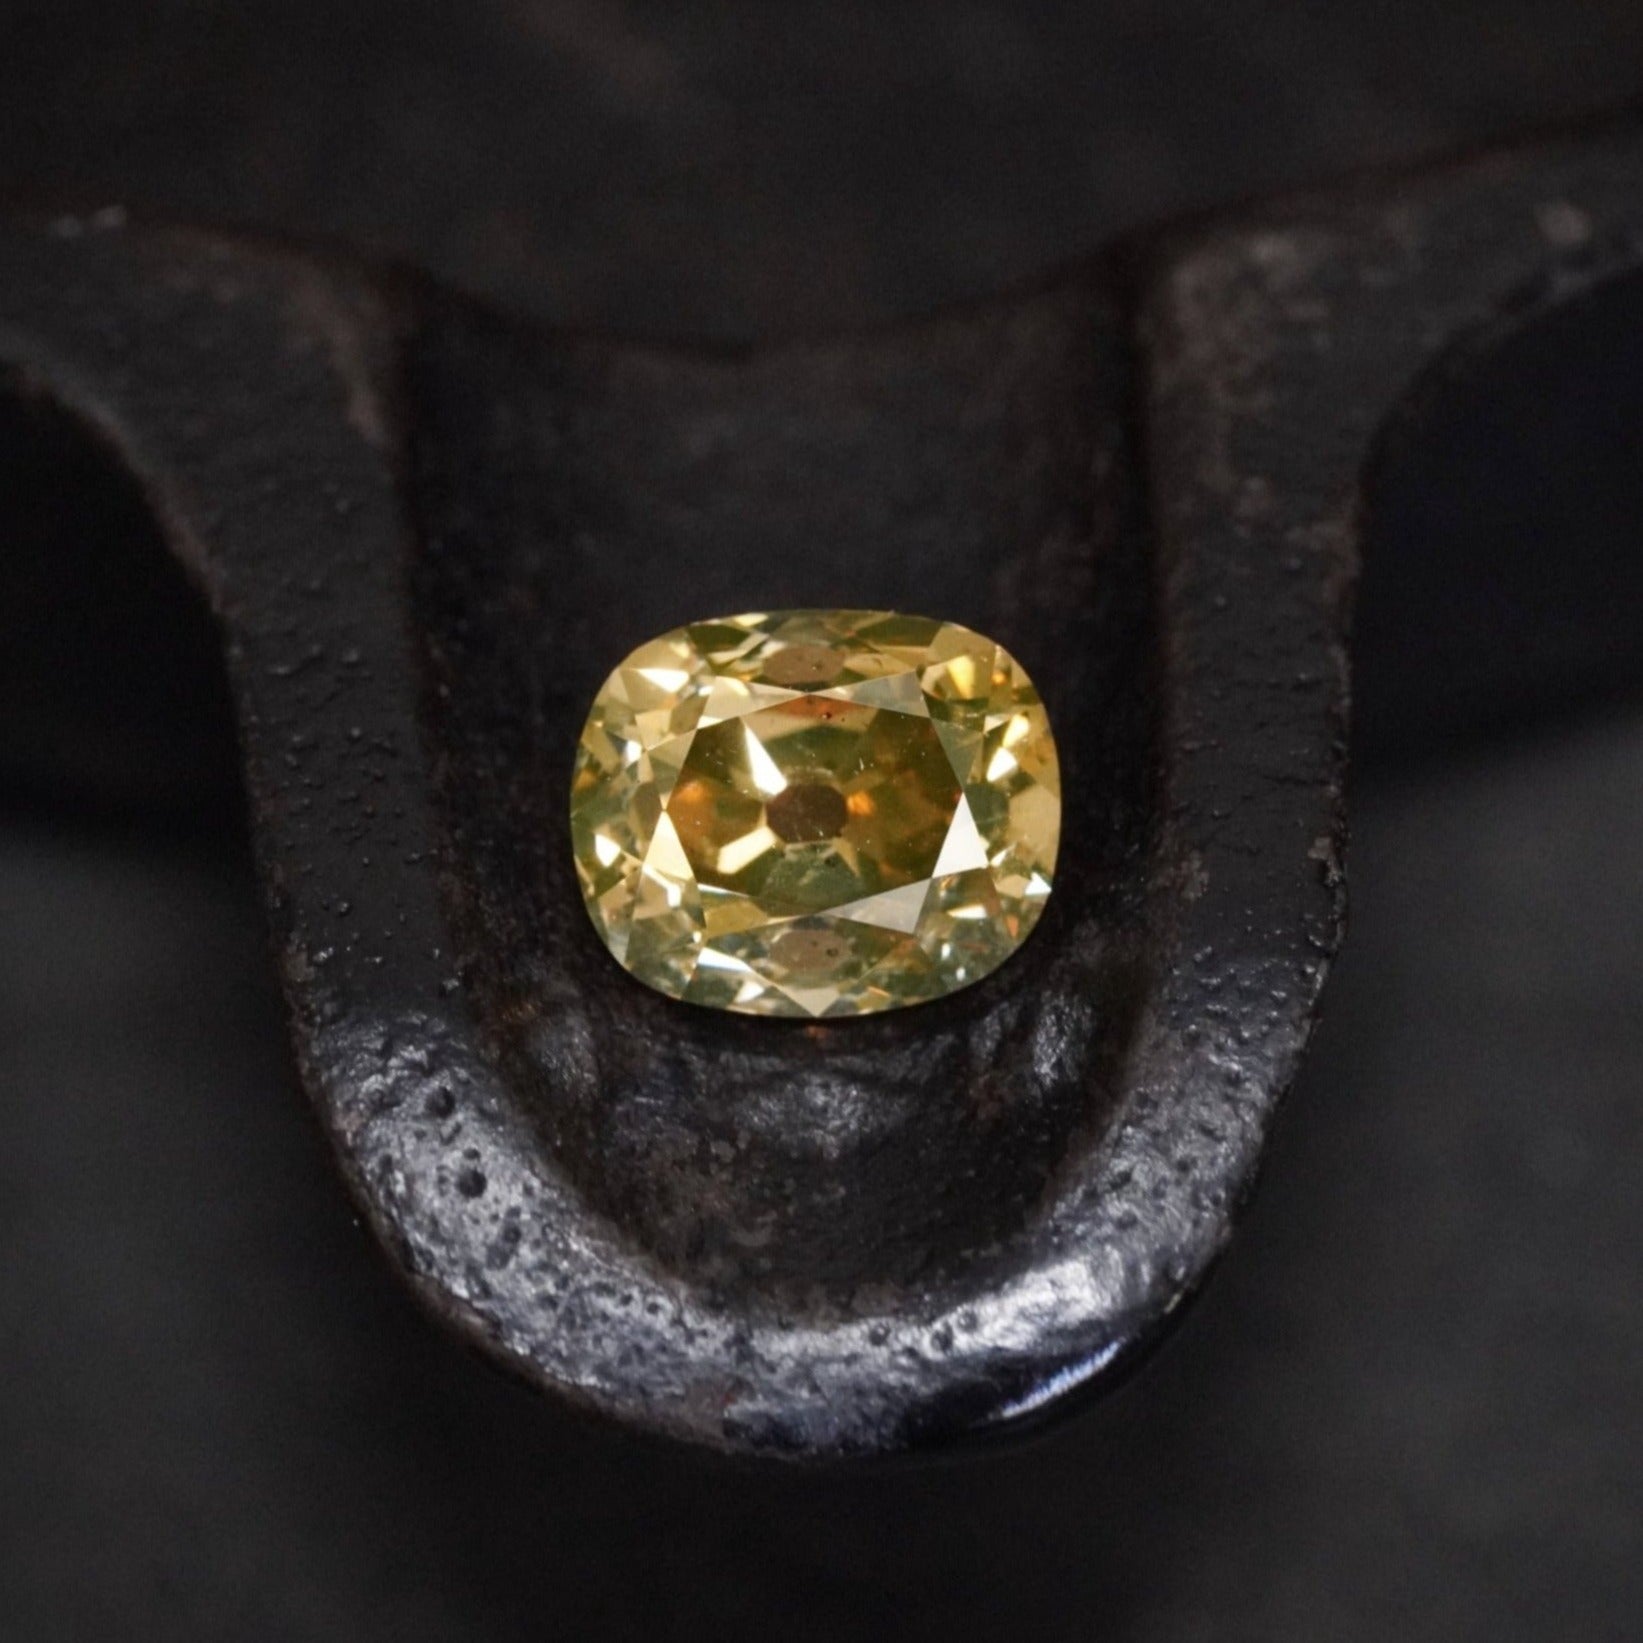 2.32-Carat Amber-Colored Cushion-Cut Diamond: Brilliance Reimagined